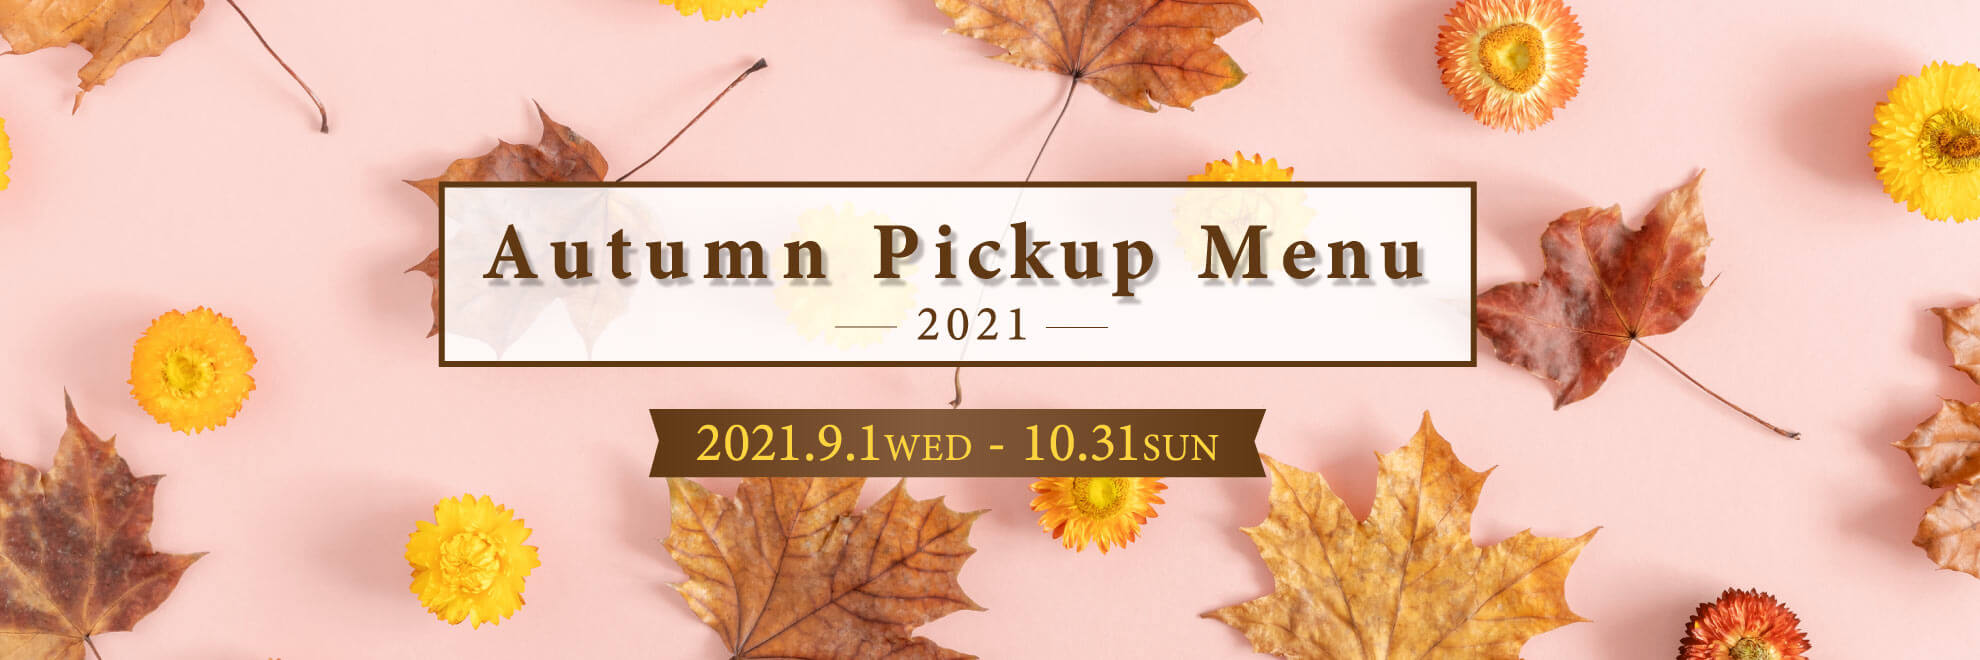 2021 Autumn Pickup Menu